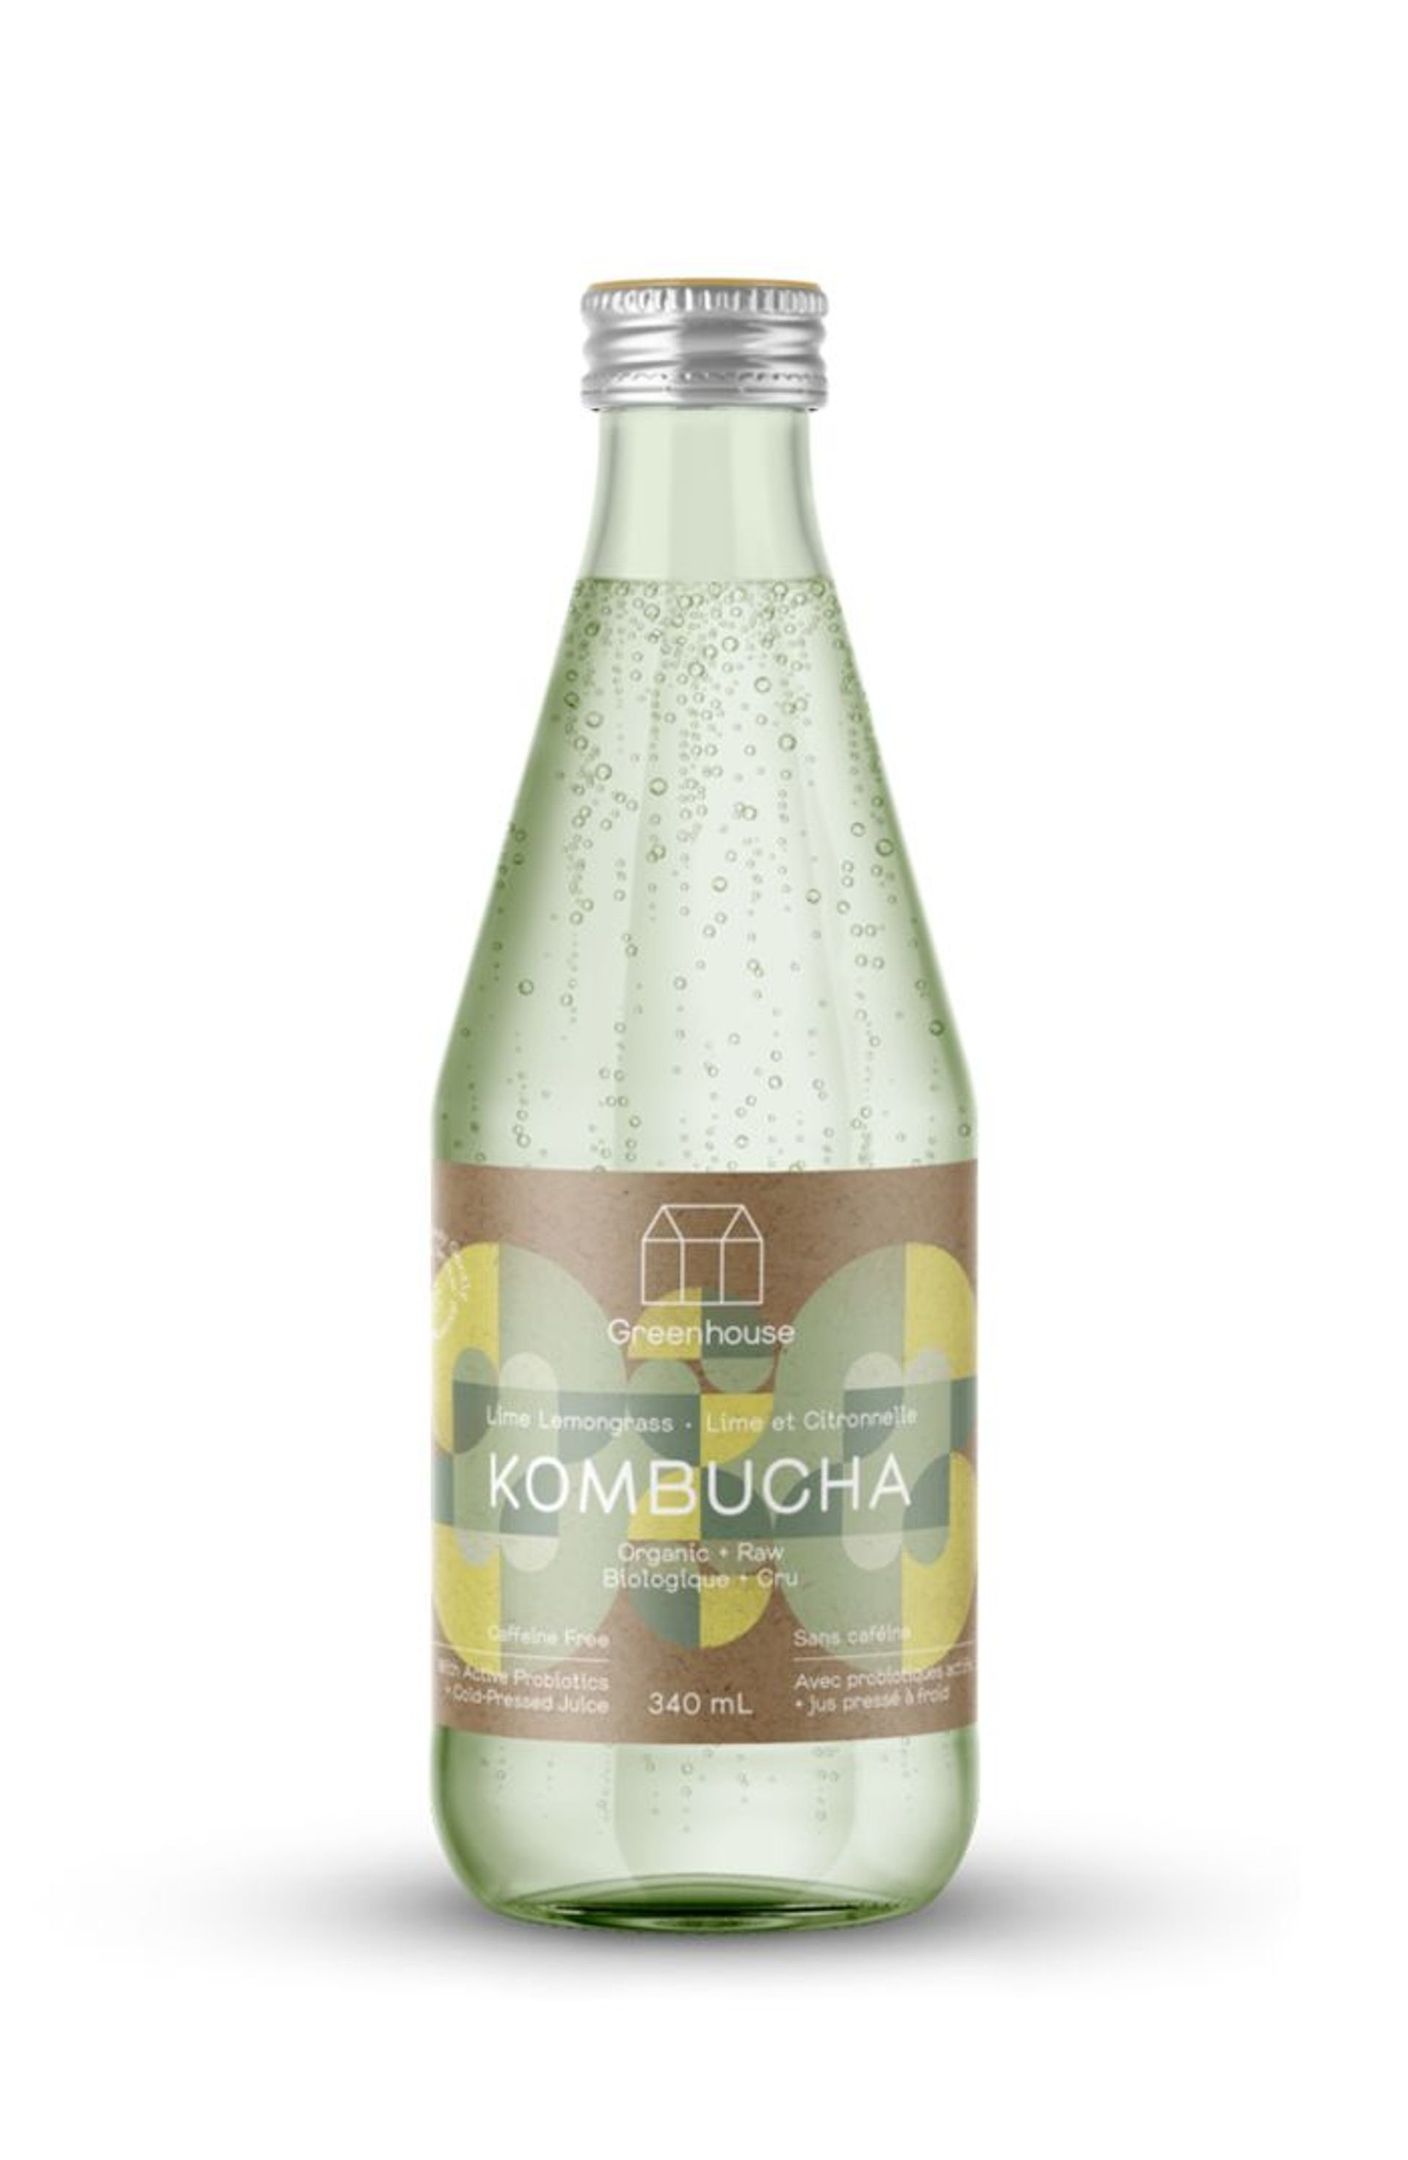  Kombucha – Lime Lemongrass